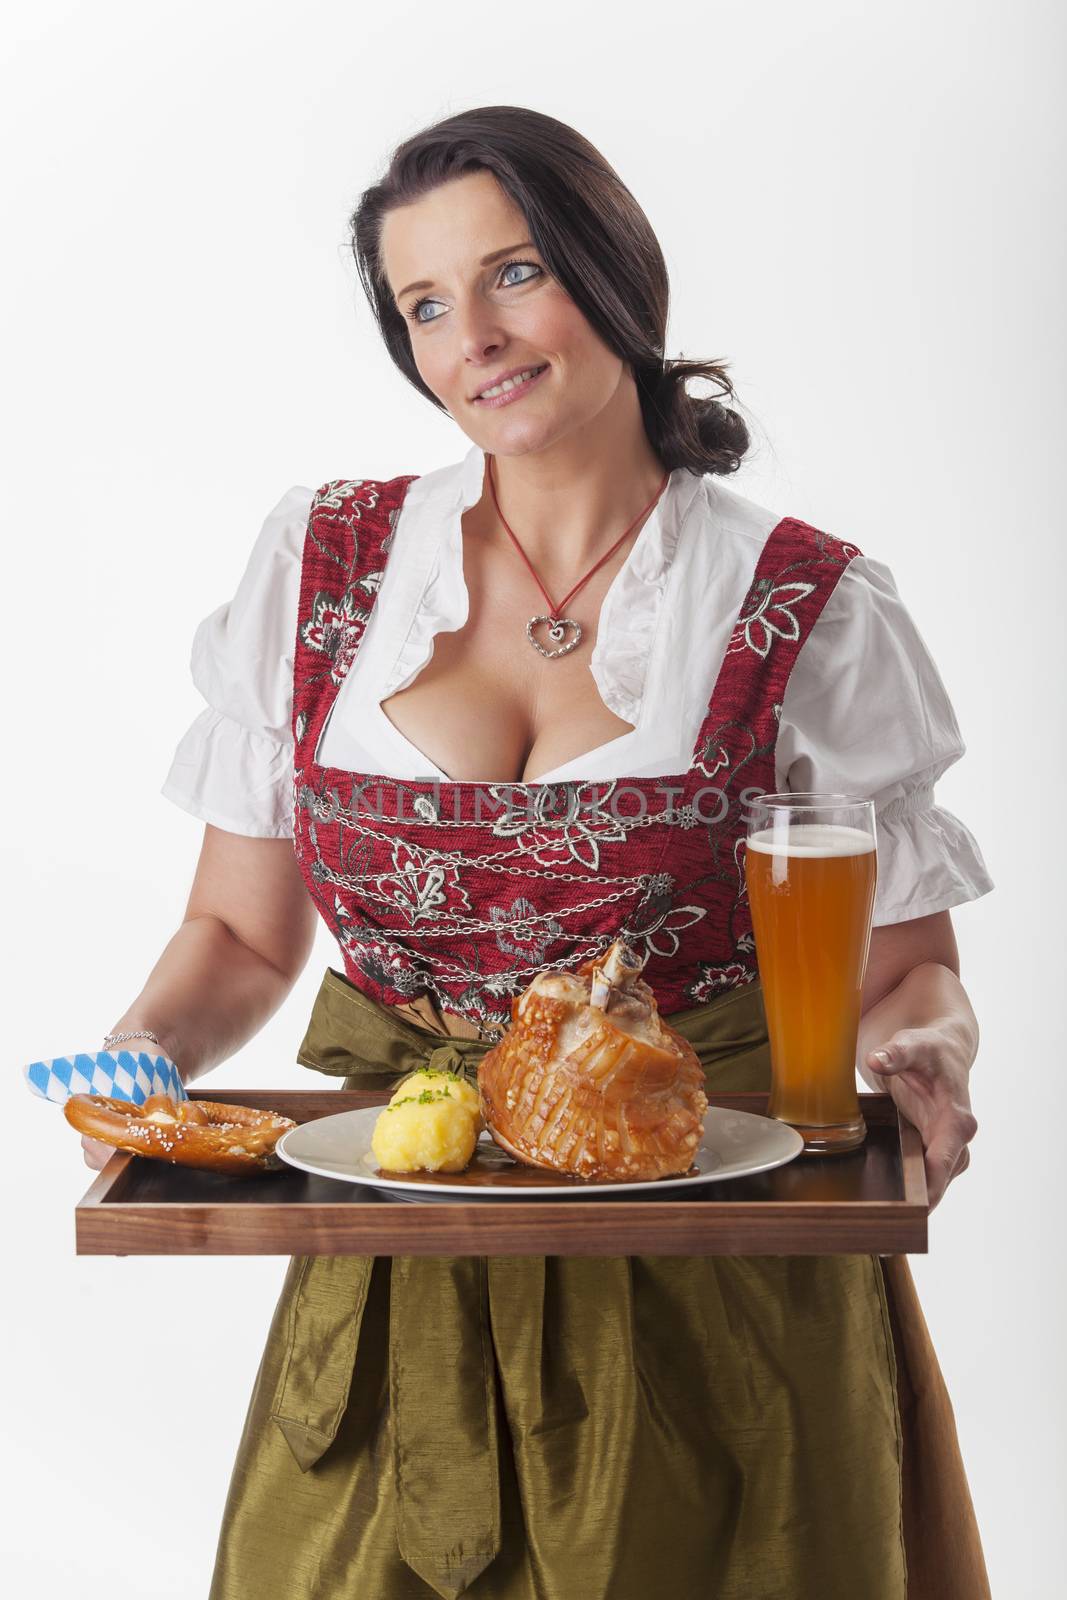 bavarian woman in a dirndl serving food